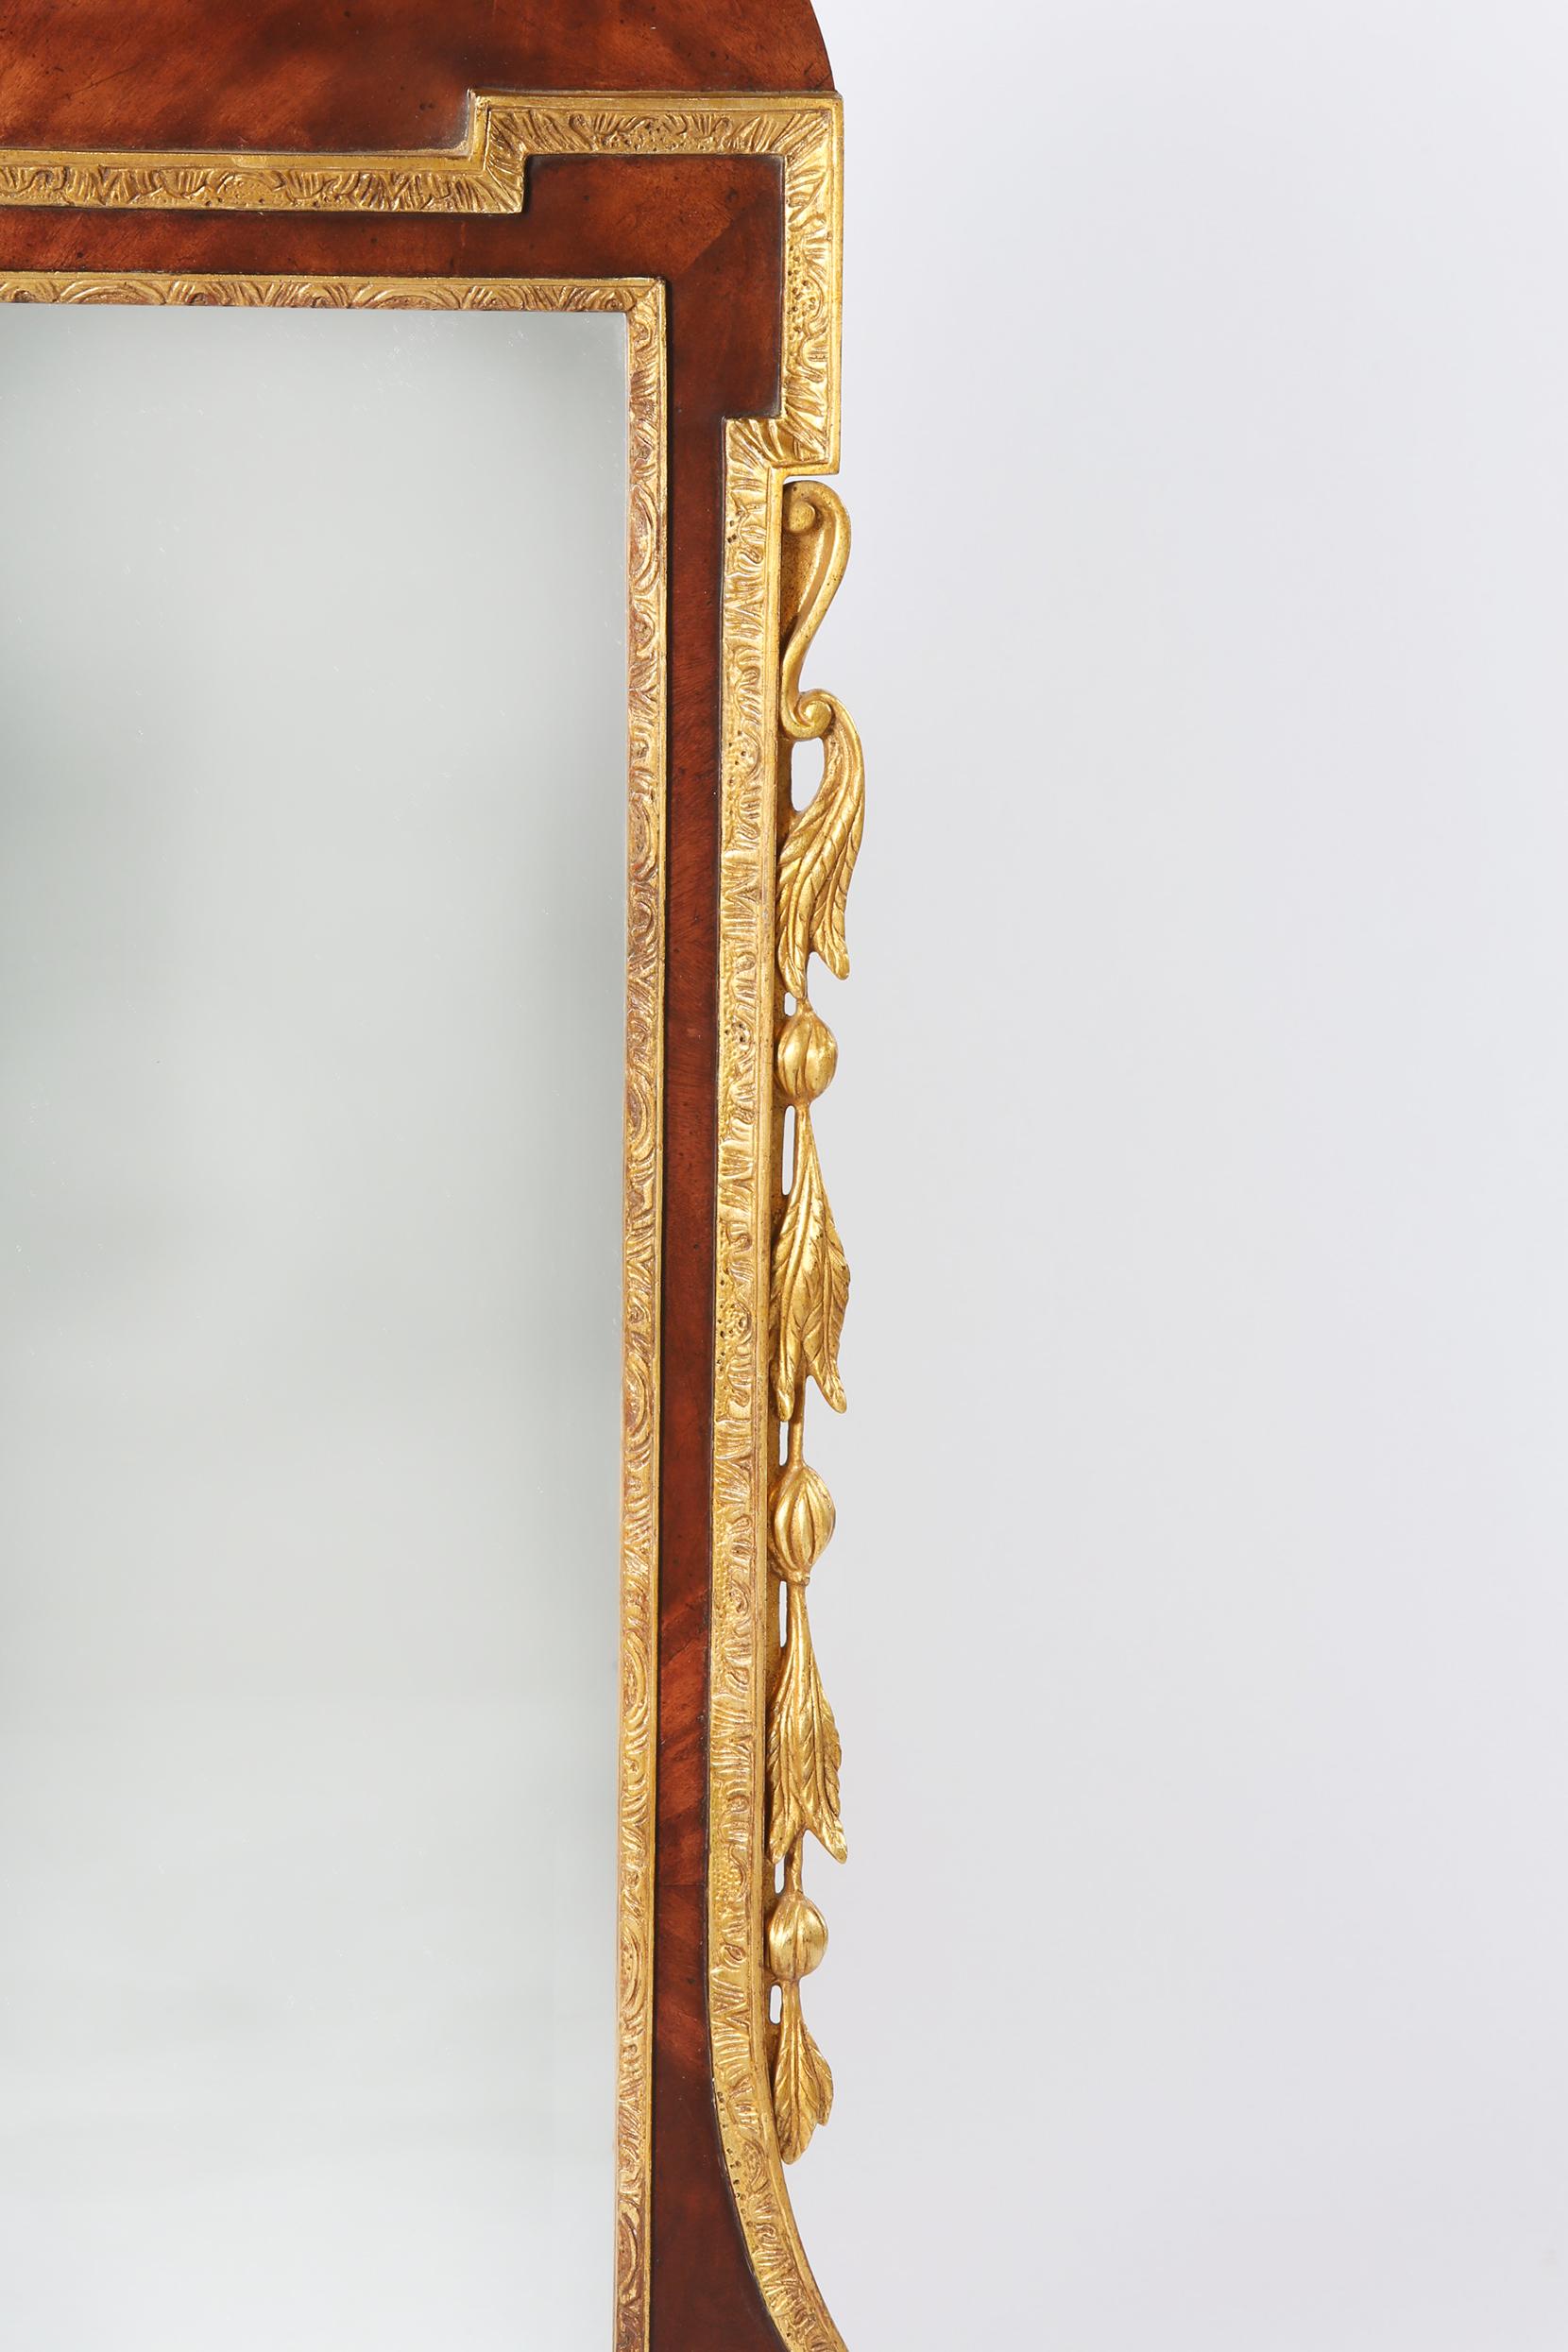 19th Century Mahogany Wood Hand Carved Beveled Wall Mirror